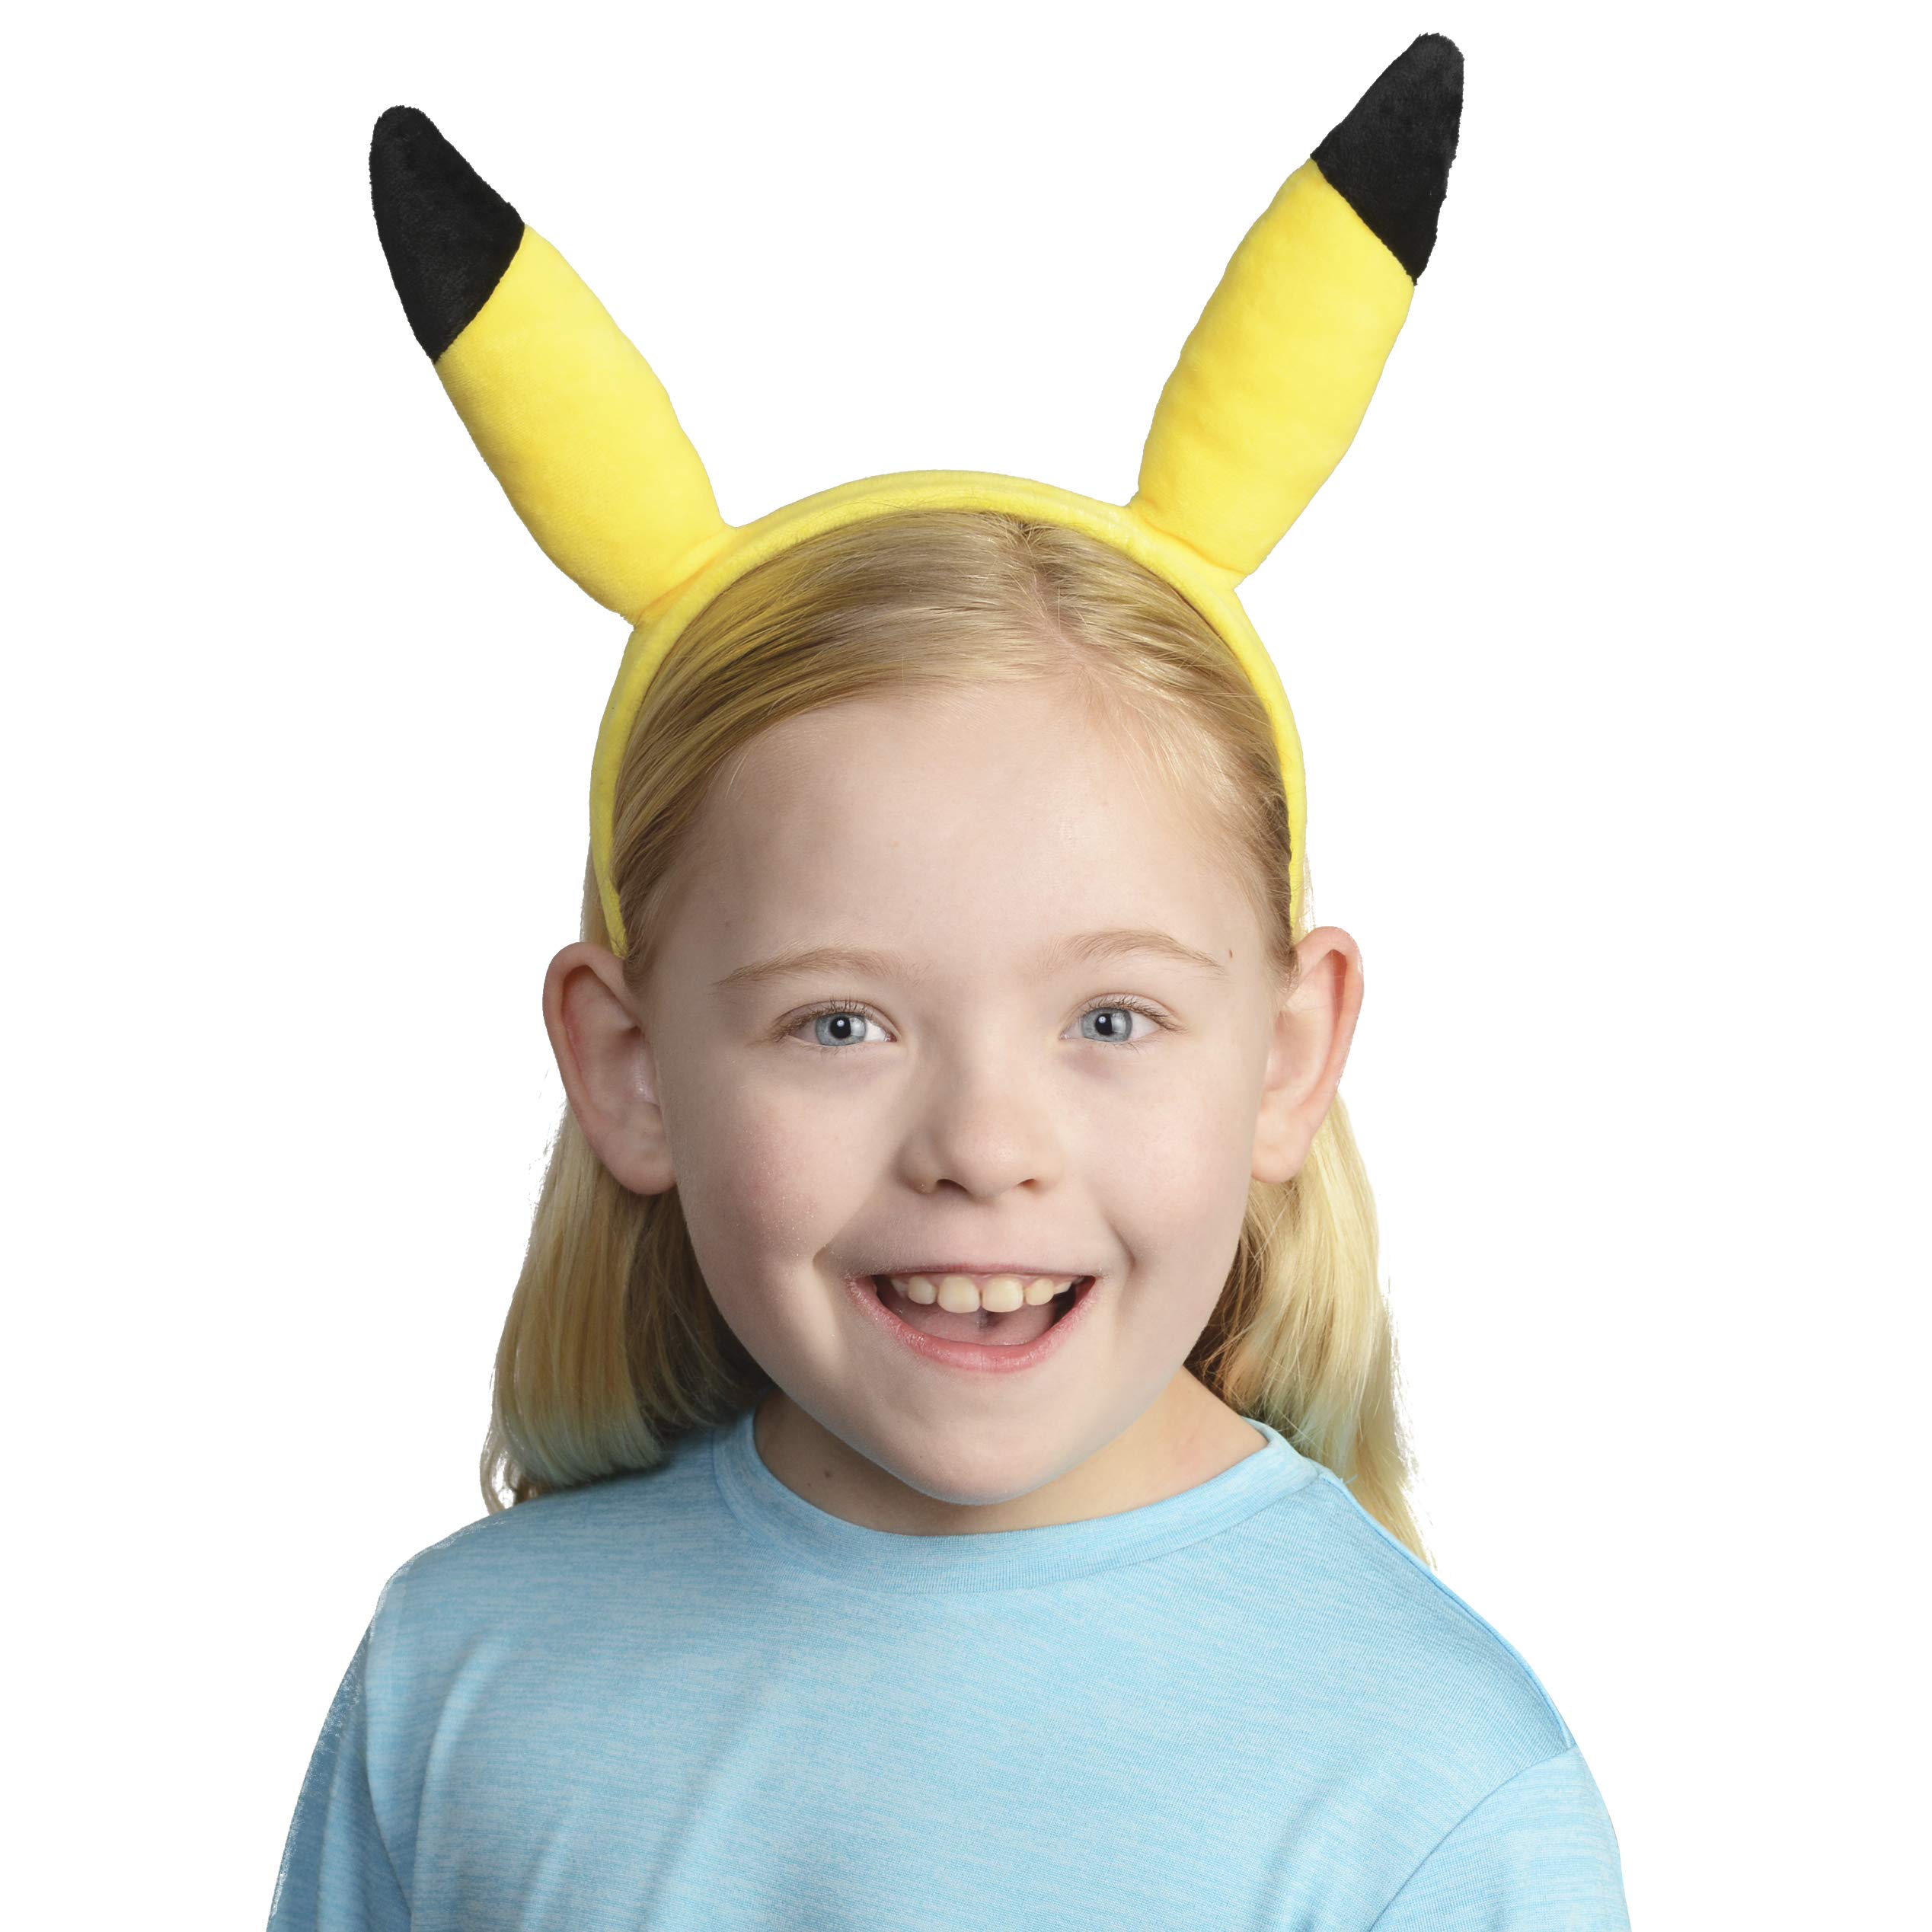 Pokémon Pikachu Plush Headband - Pikachu Ears for Halloween, Accessory, Dress Up, Pretend & More - One Size Fits All